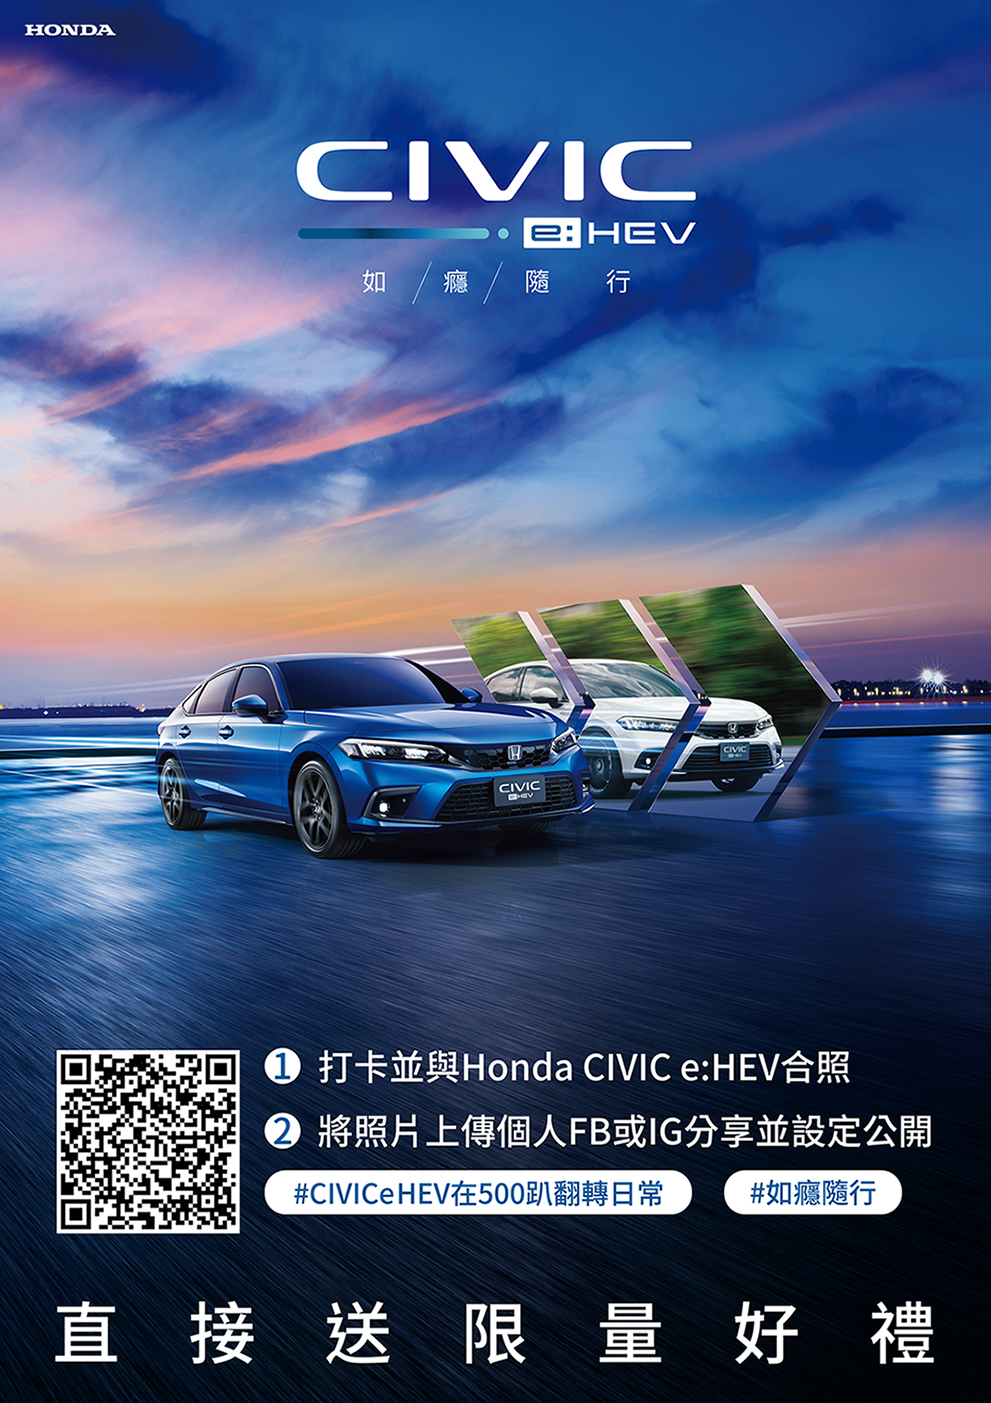 All-New CIVIC eHEV 500趴活動.jpg